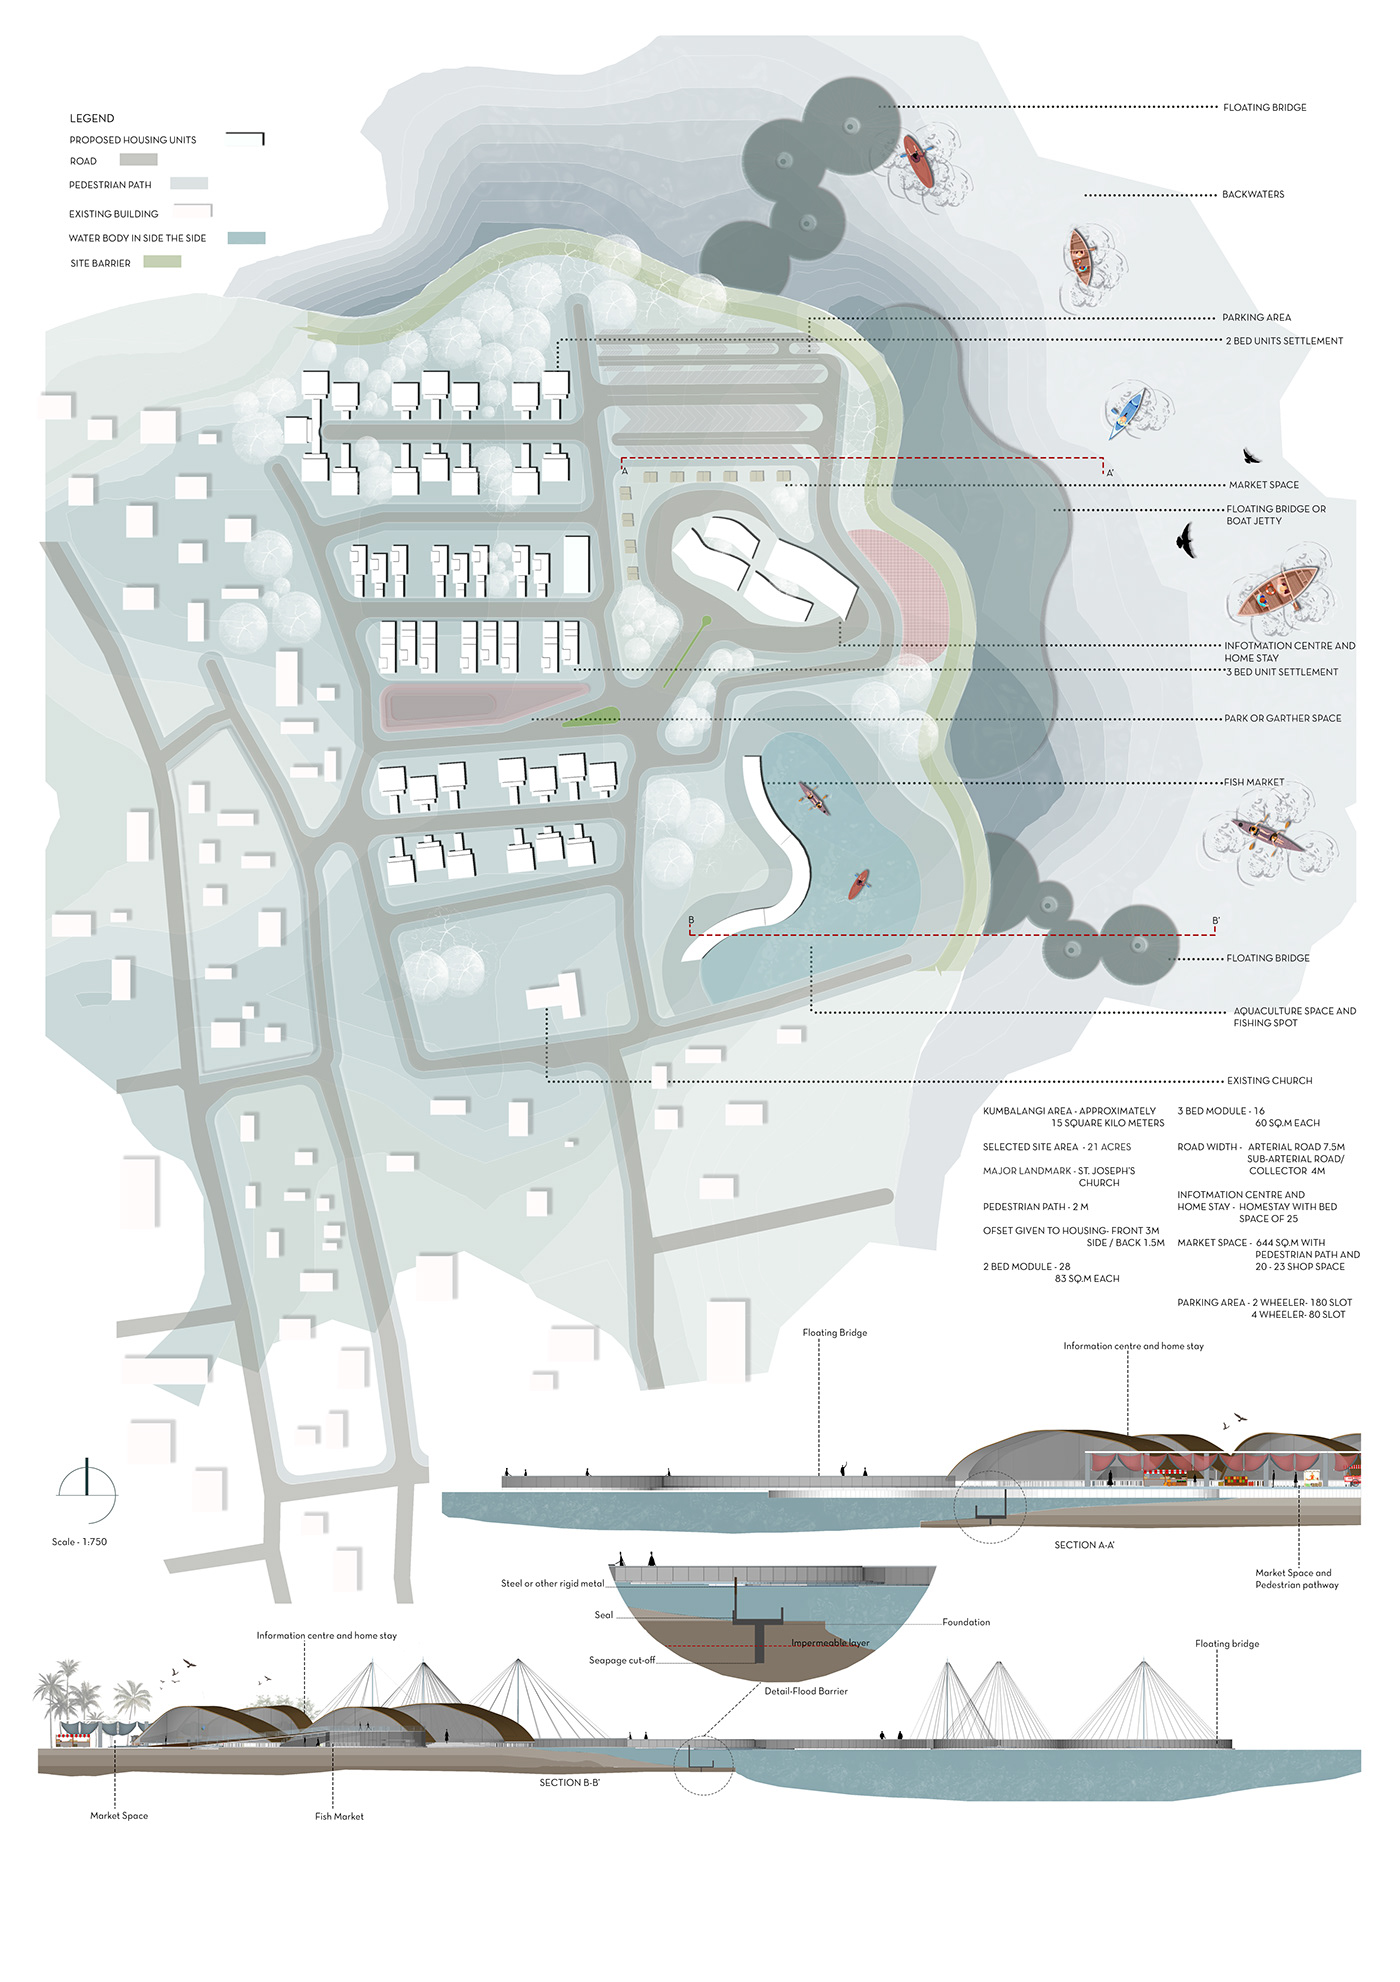 community center housing riverfront Economic Development urbanplanning planning visualization site design siteplanning water resistant